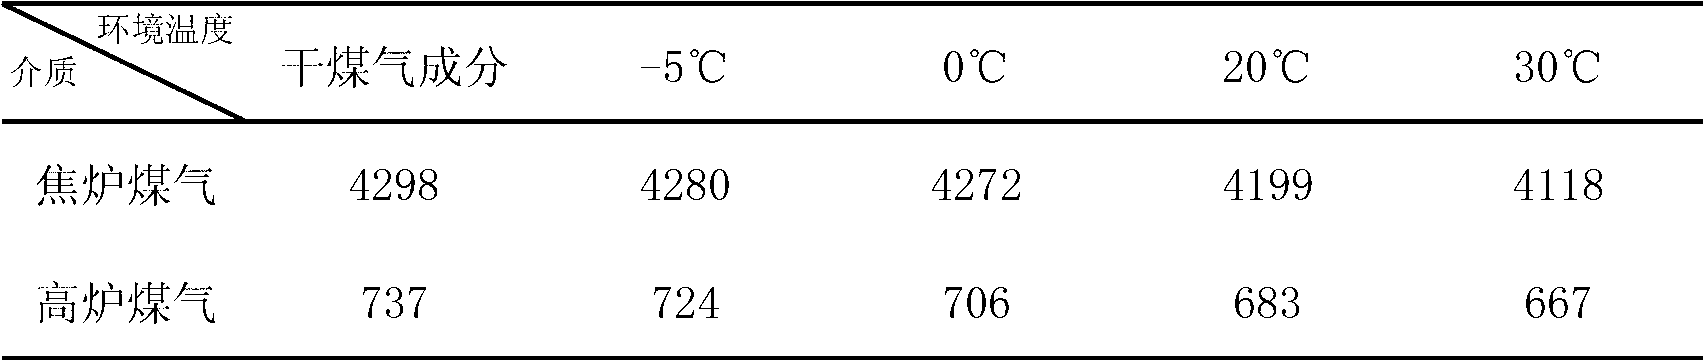 Coal gas flow measuring method based on heat value measurement